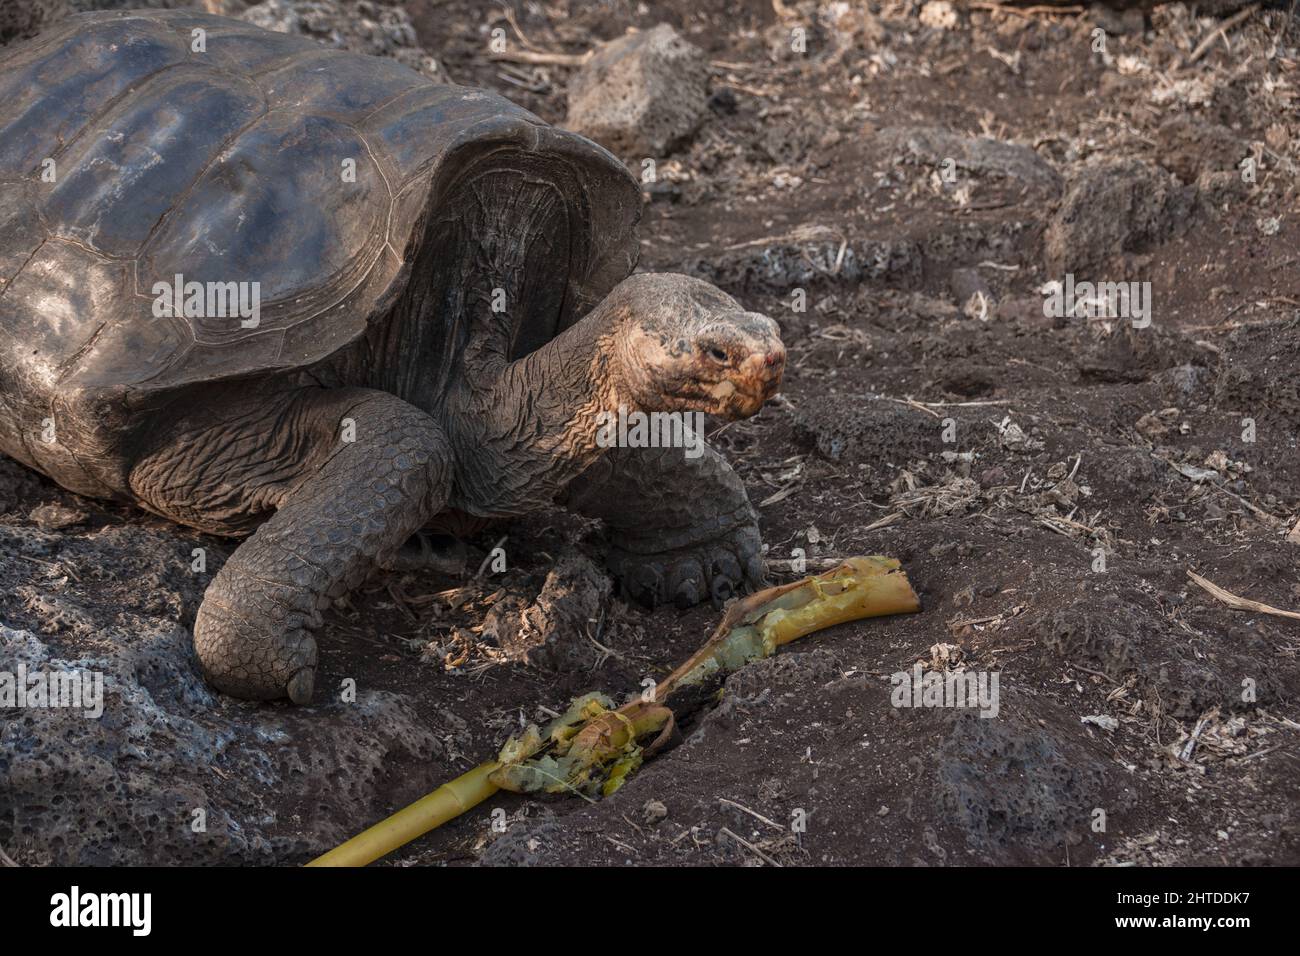 View of Galapagos Giant Tortoise enjoying sunlight in its natural habitat Stock Photo